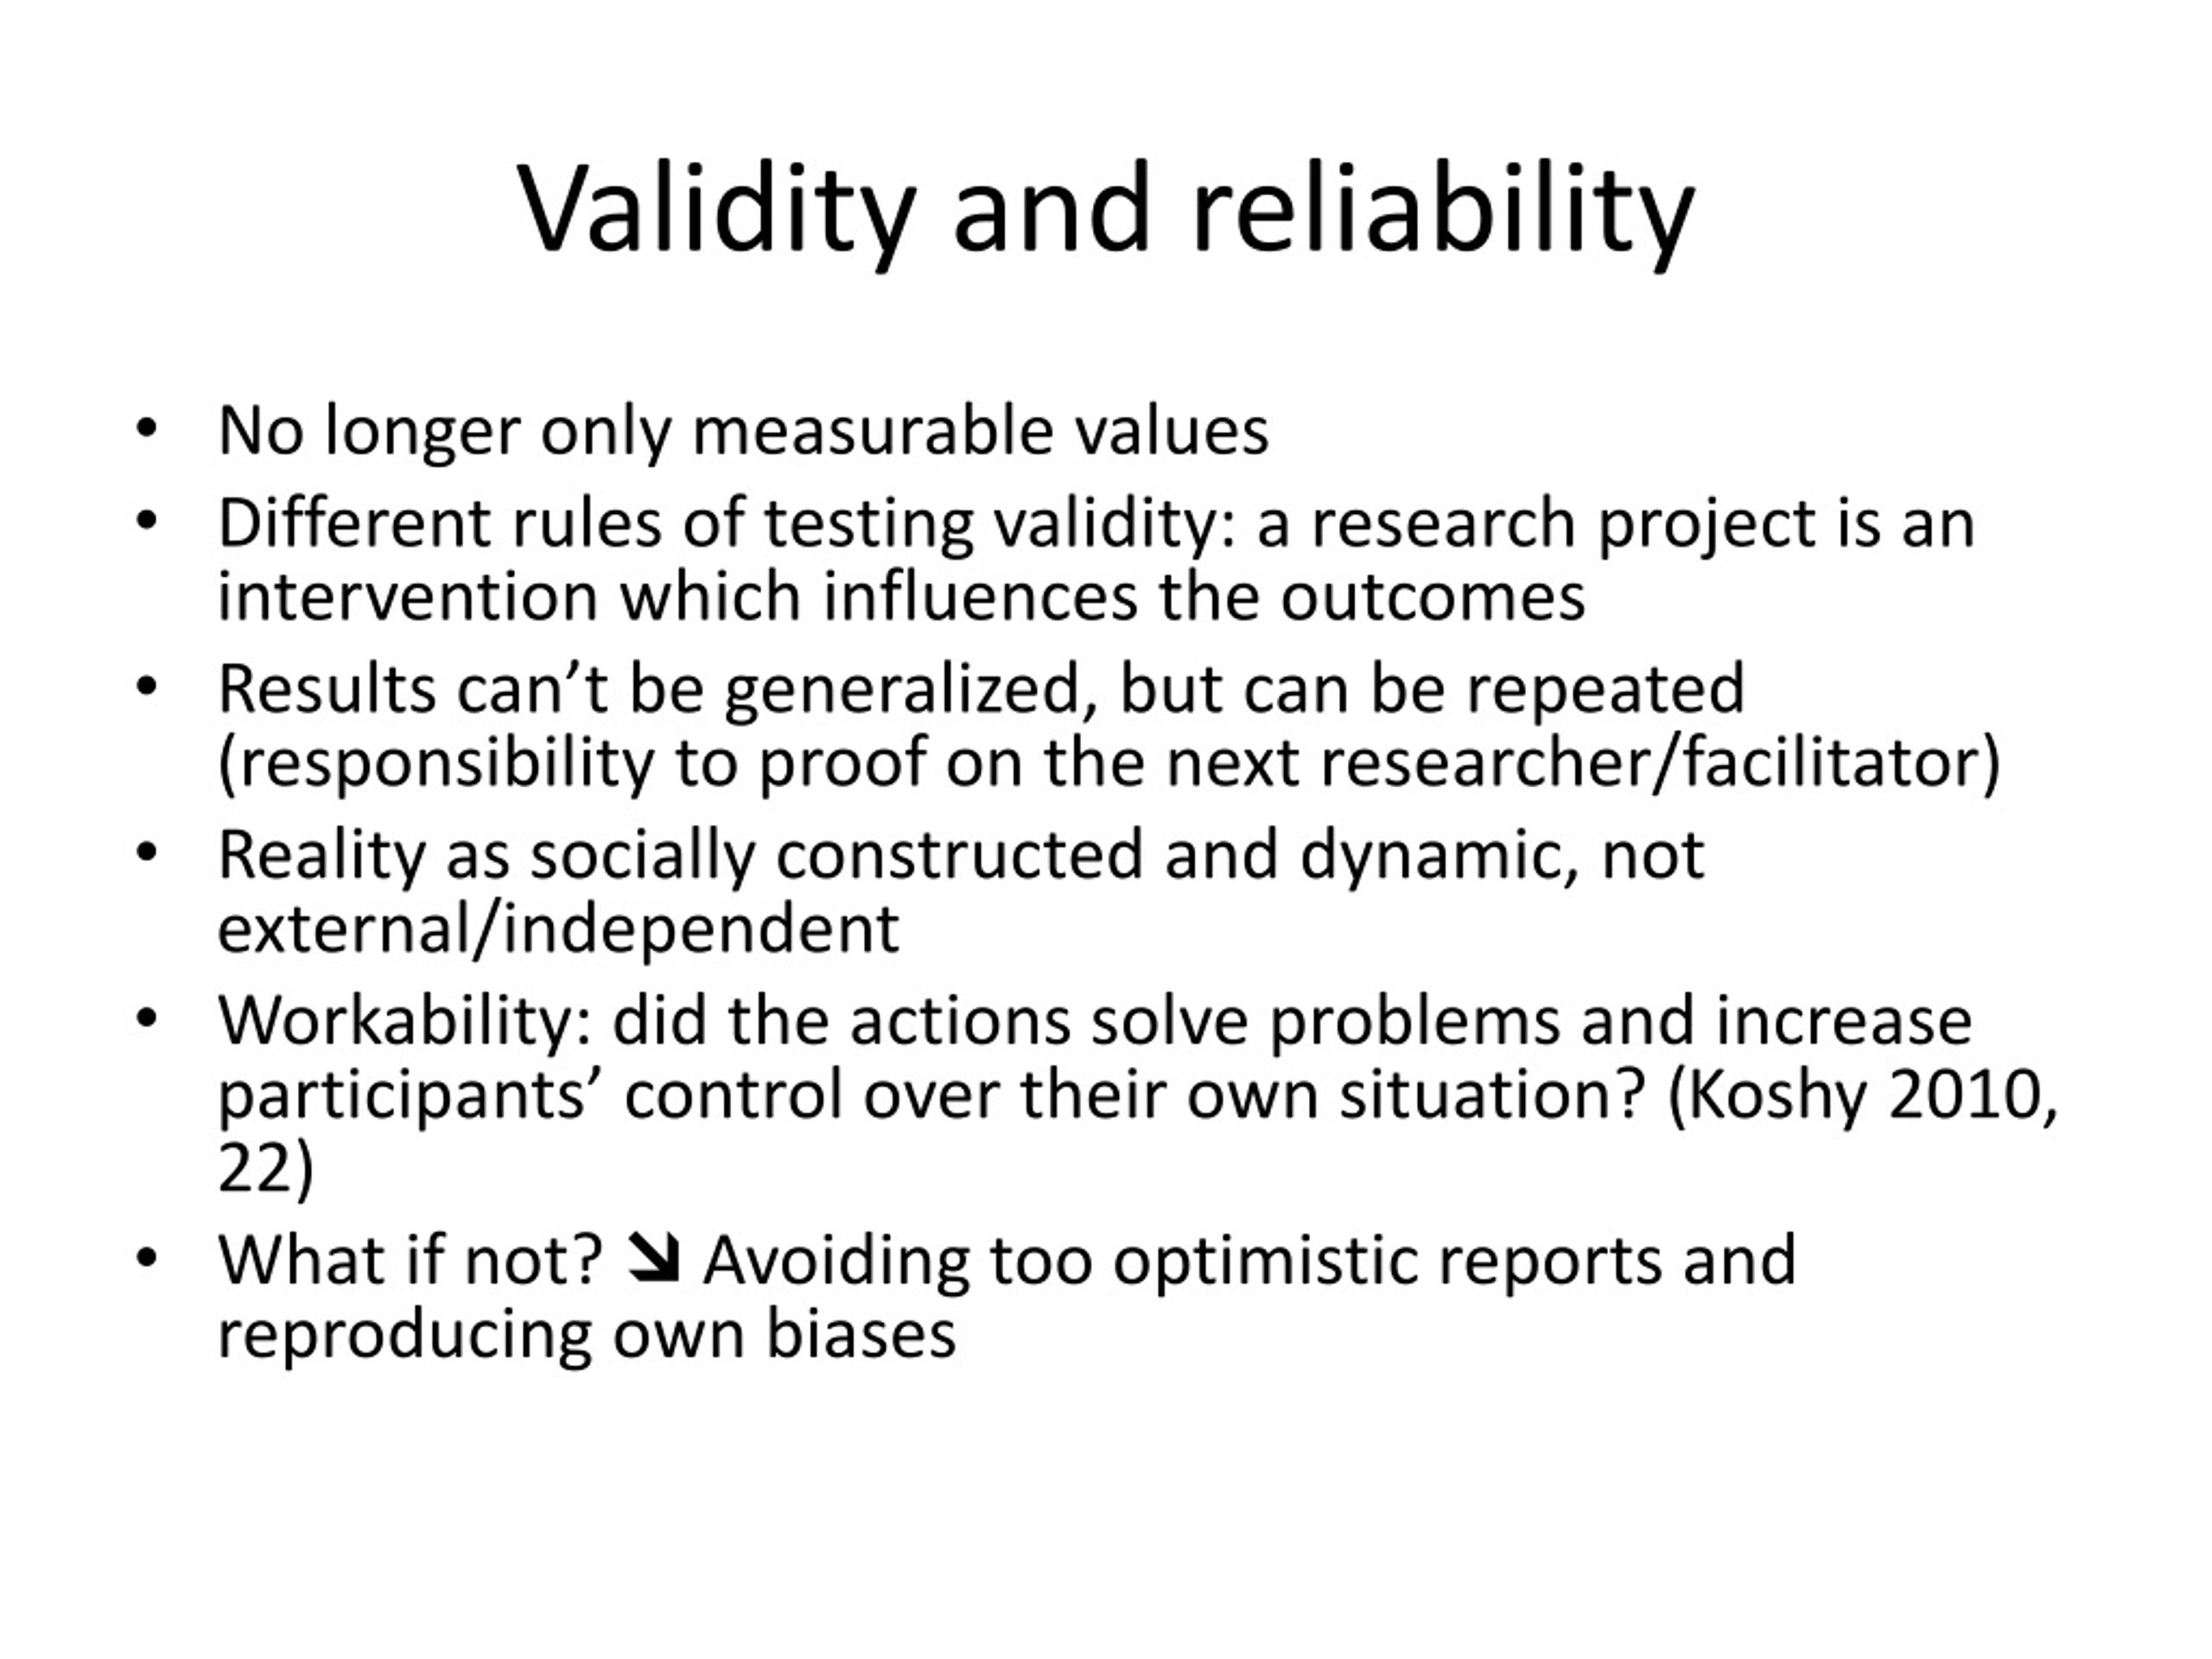 validity versus reliability